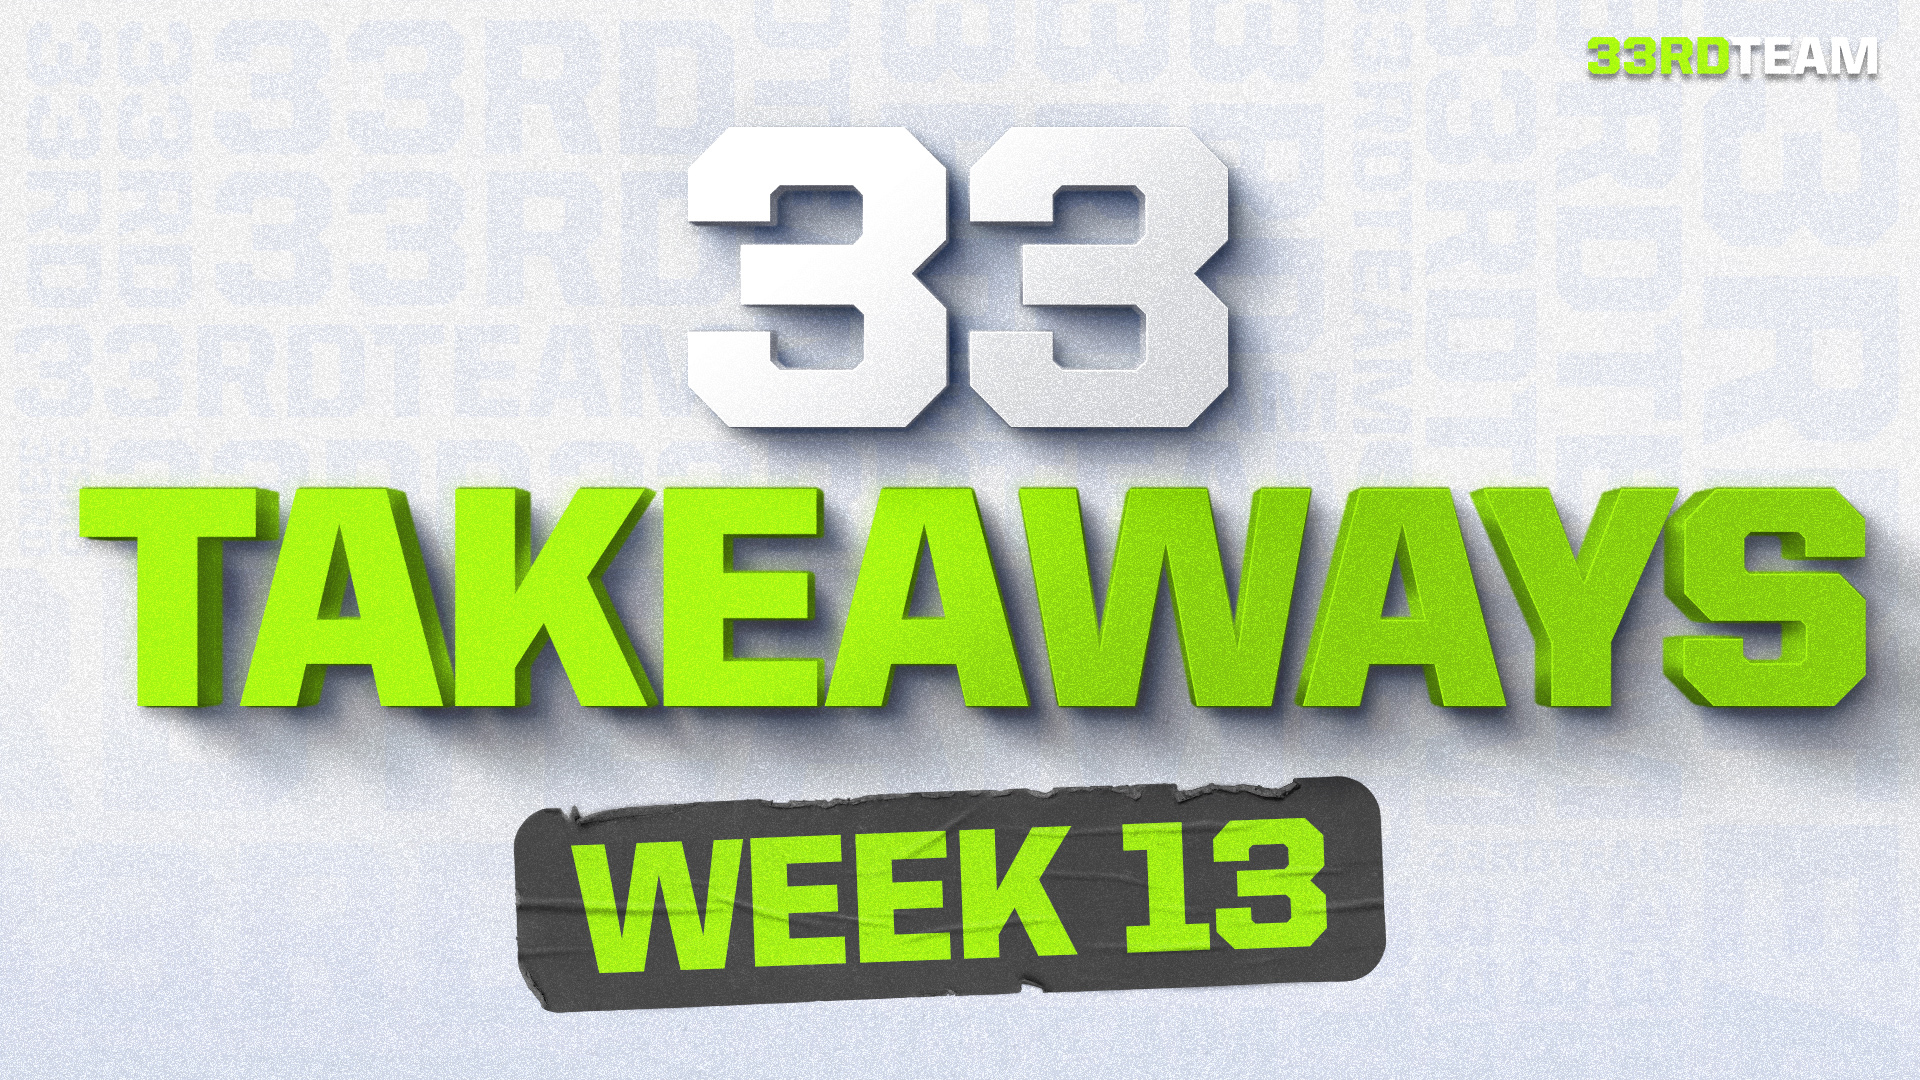 What We Learned: 33 Expert Takeaways From Week 13